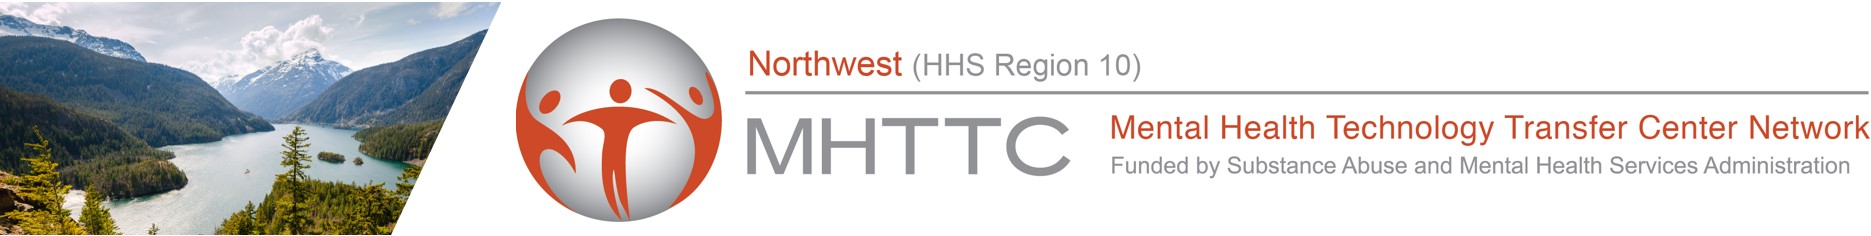 Northwest MHTTC logo and image of a mountain